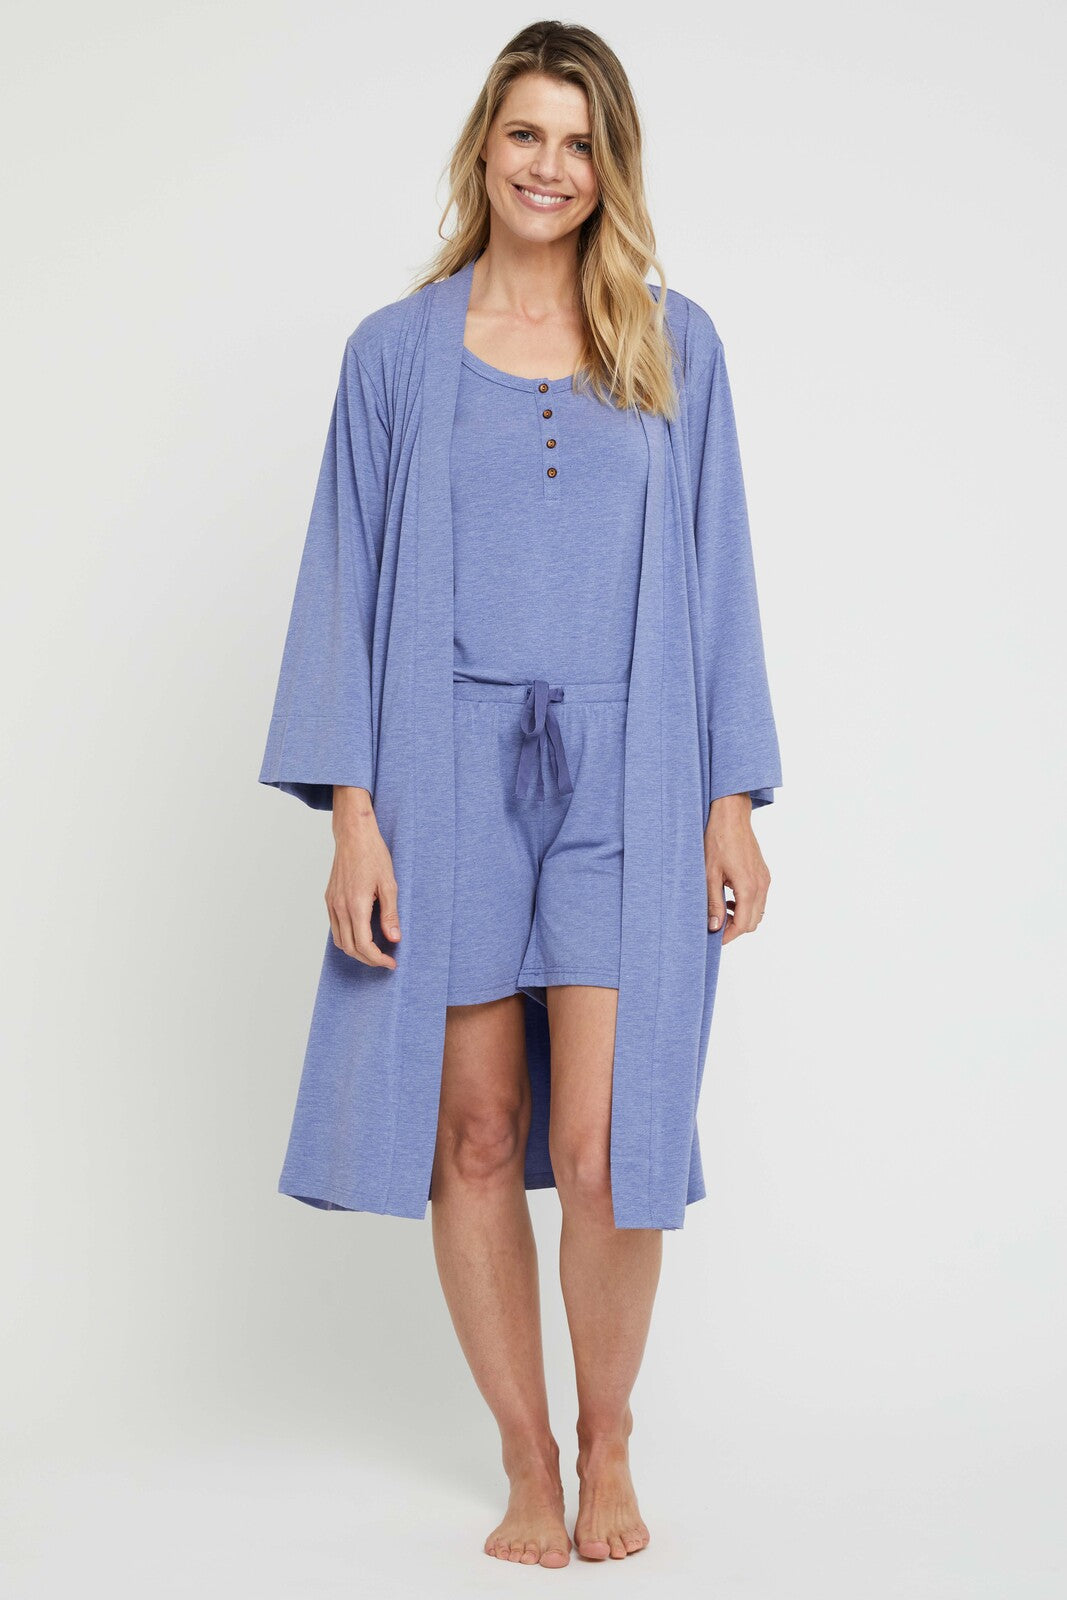 Organic Bamboo Sleepwear Robe Robe from Bamboo Body maternity online store brisbane sydney perth australia